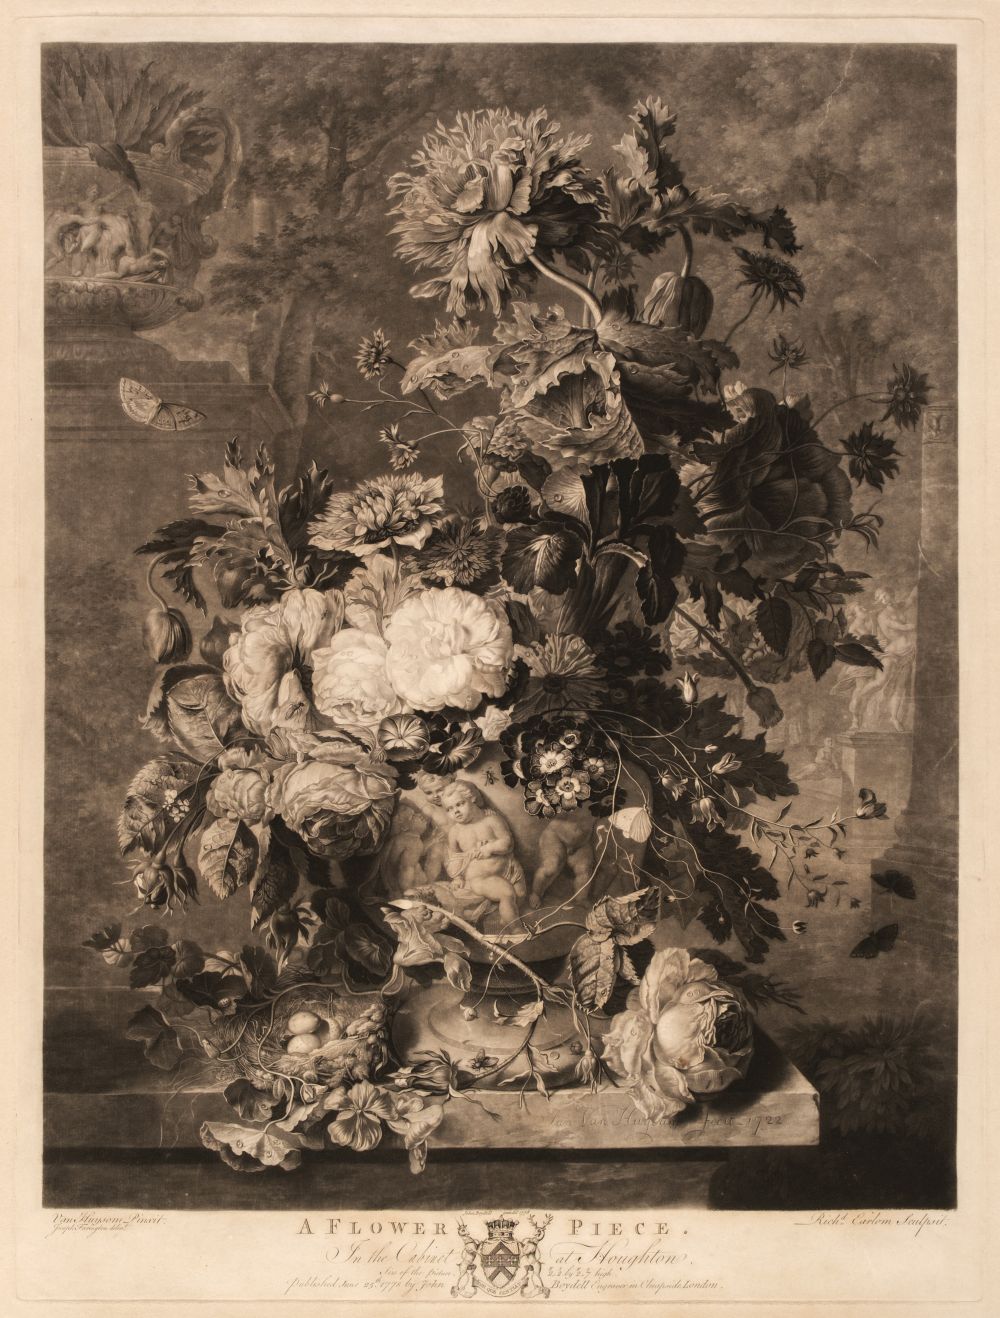 Earlom (Richard, 1743-1822). A Flower Piece, and A Fruit Piece, after van Huysum, 1778, mezzotints